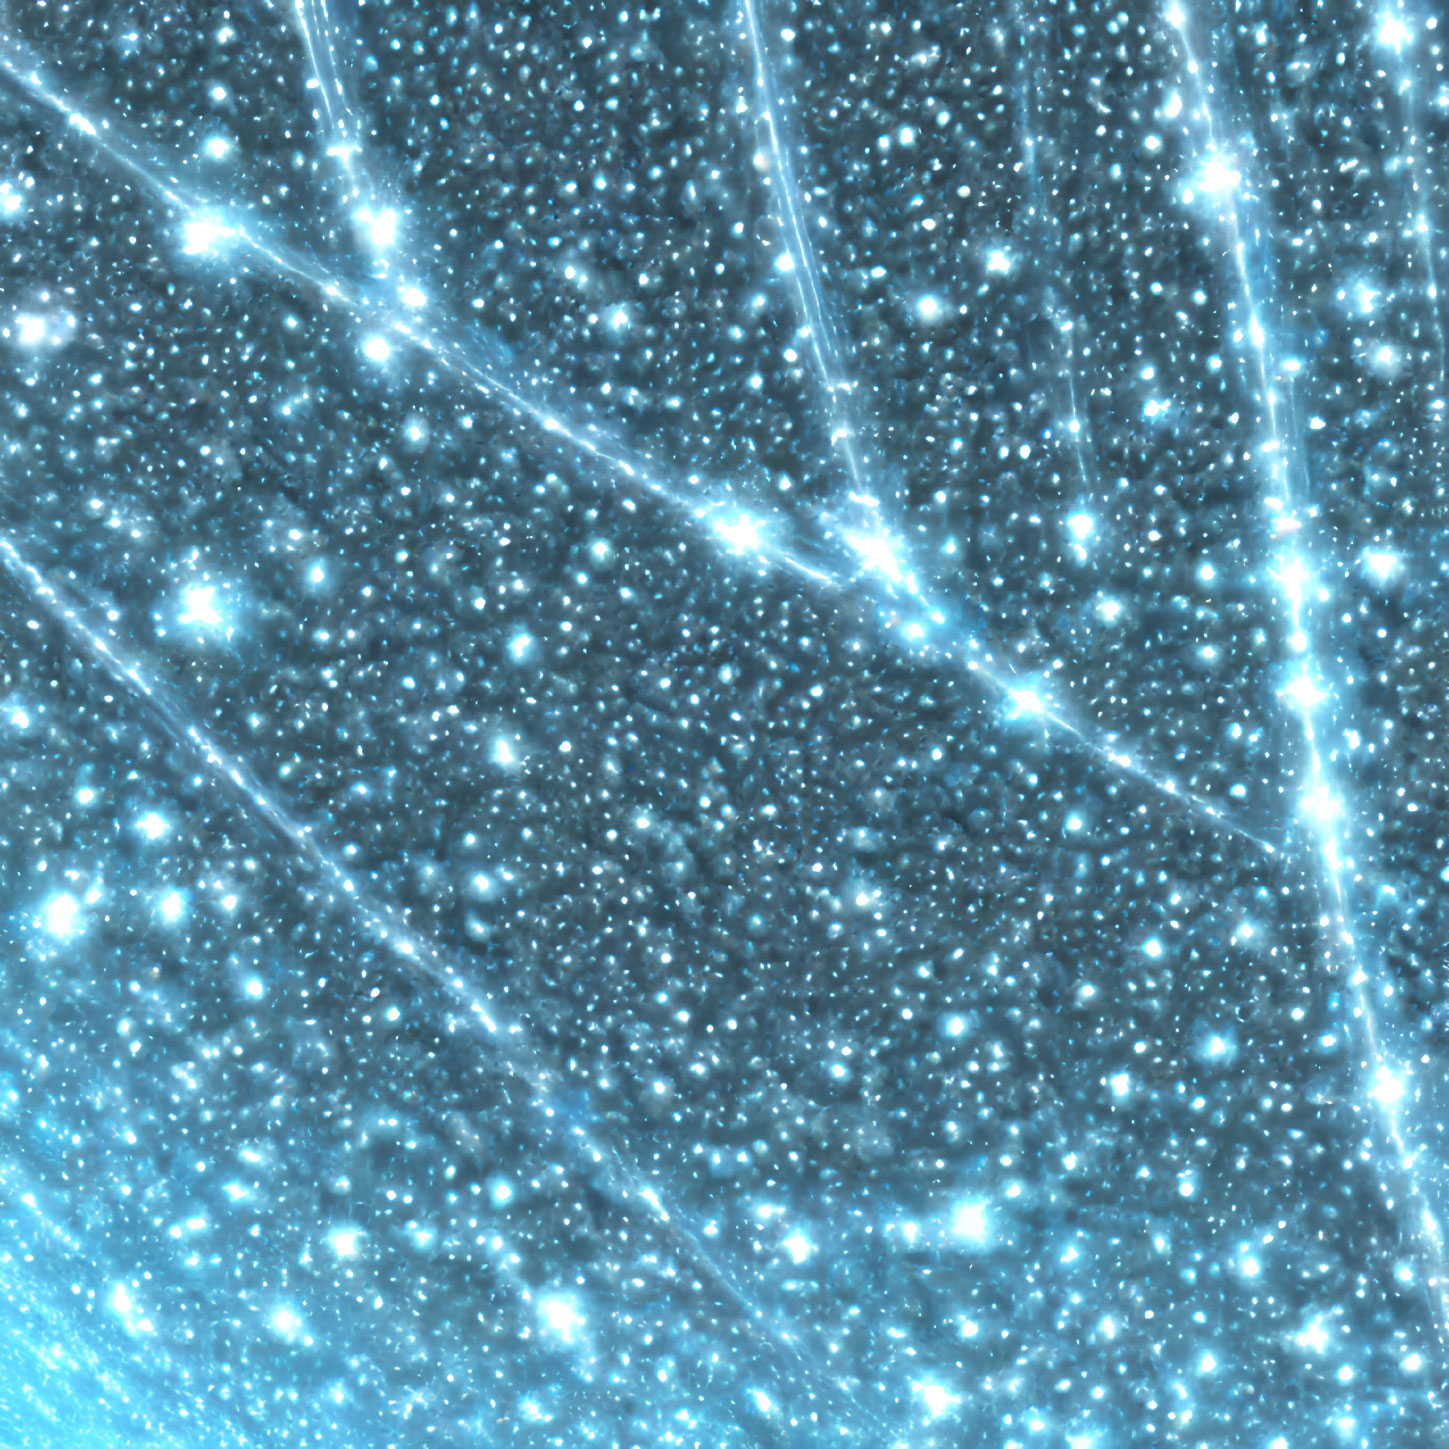 Blue Sparkling Particles with Dynamic Light Streaks: Celestial Scene or Digital Starry Sky